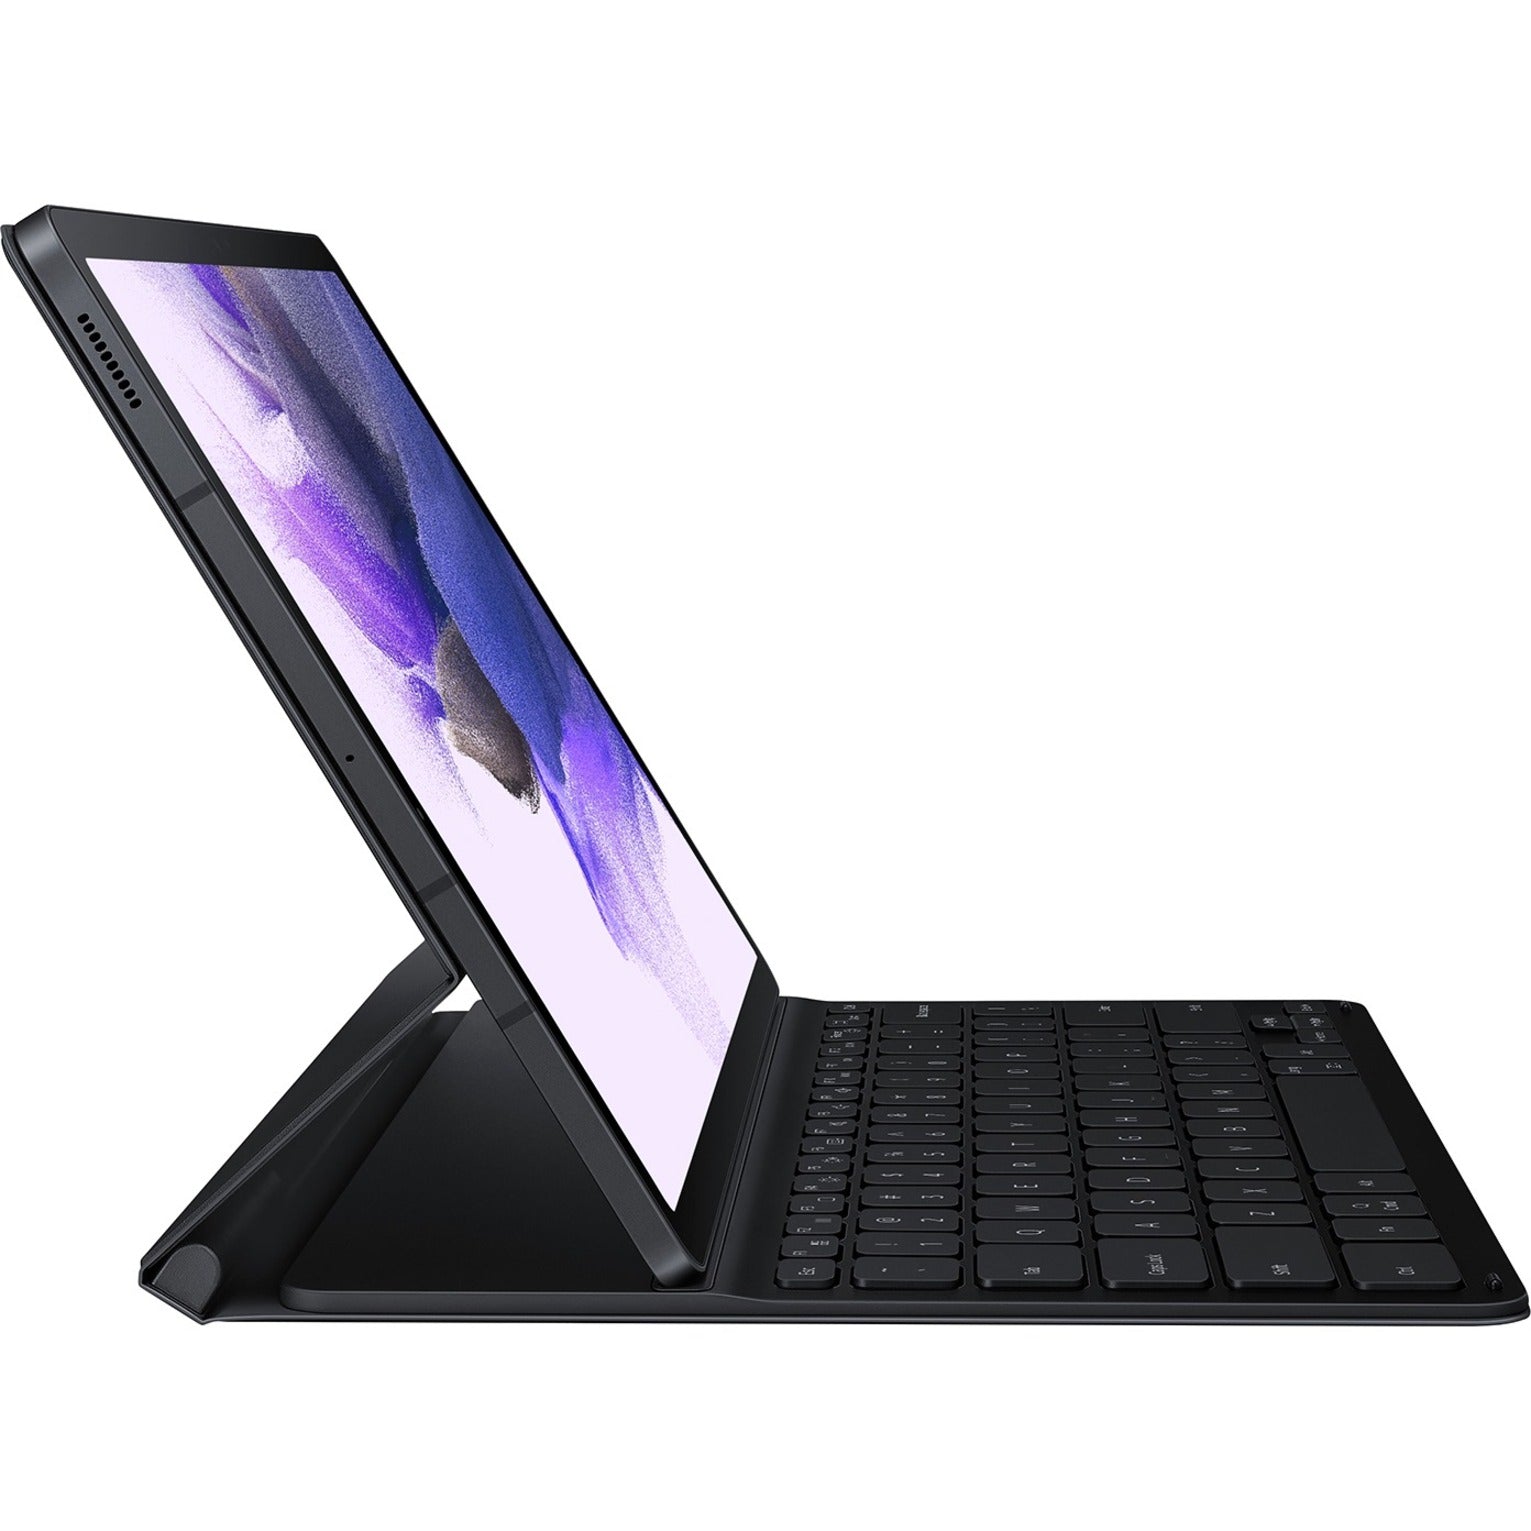 Samsung EF-DT730UBEGUJ Galaxy Tab S7 FE Slim Book Cover Keyboard, Mystic Black - Tablet Keyboard/Cover Case